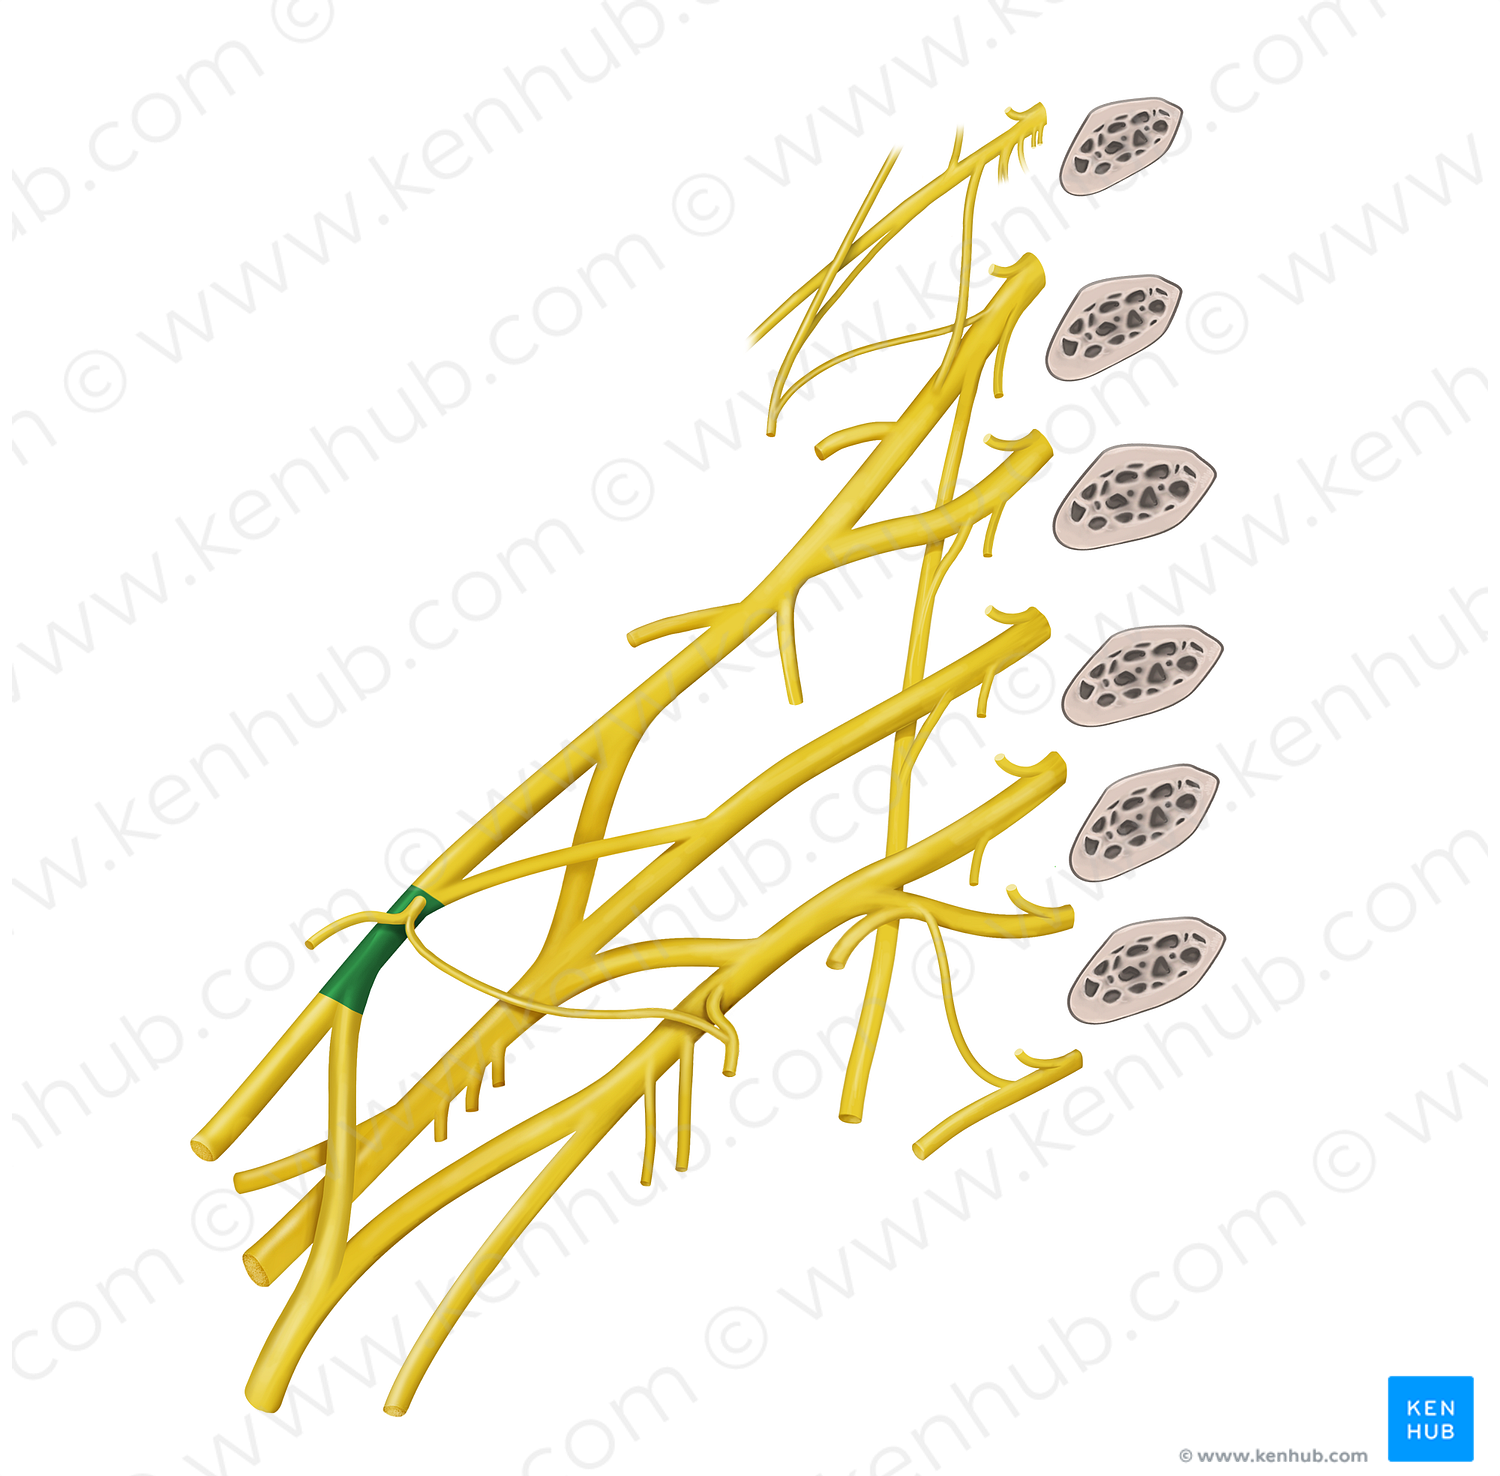 Lateral cord of brachial plexus (#3603)